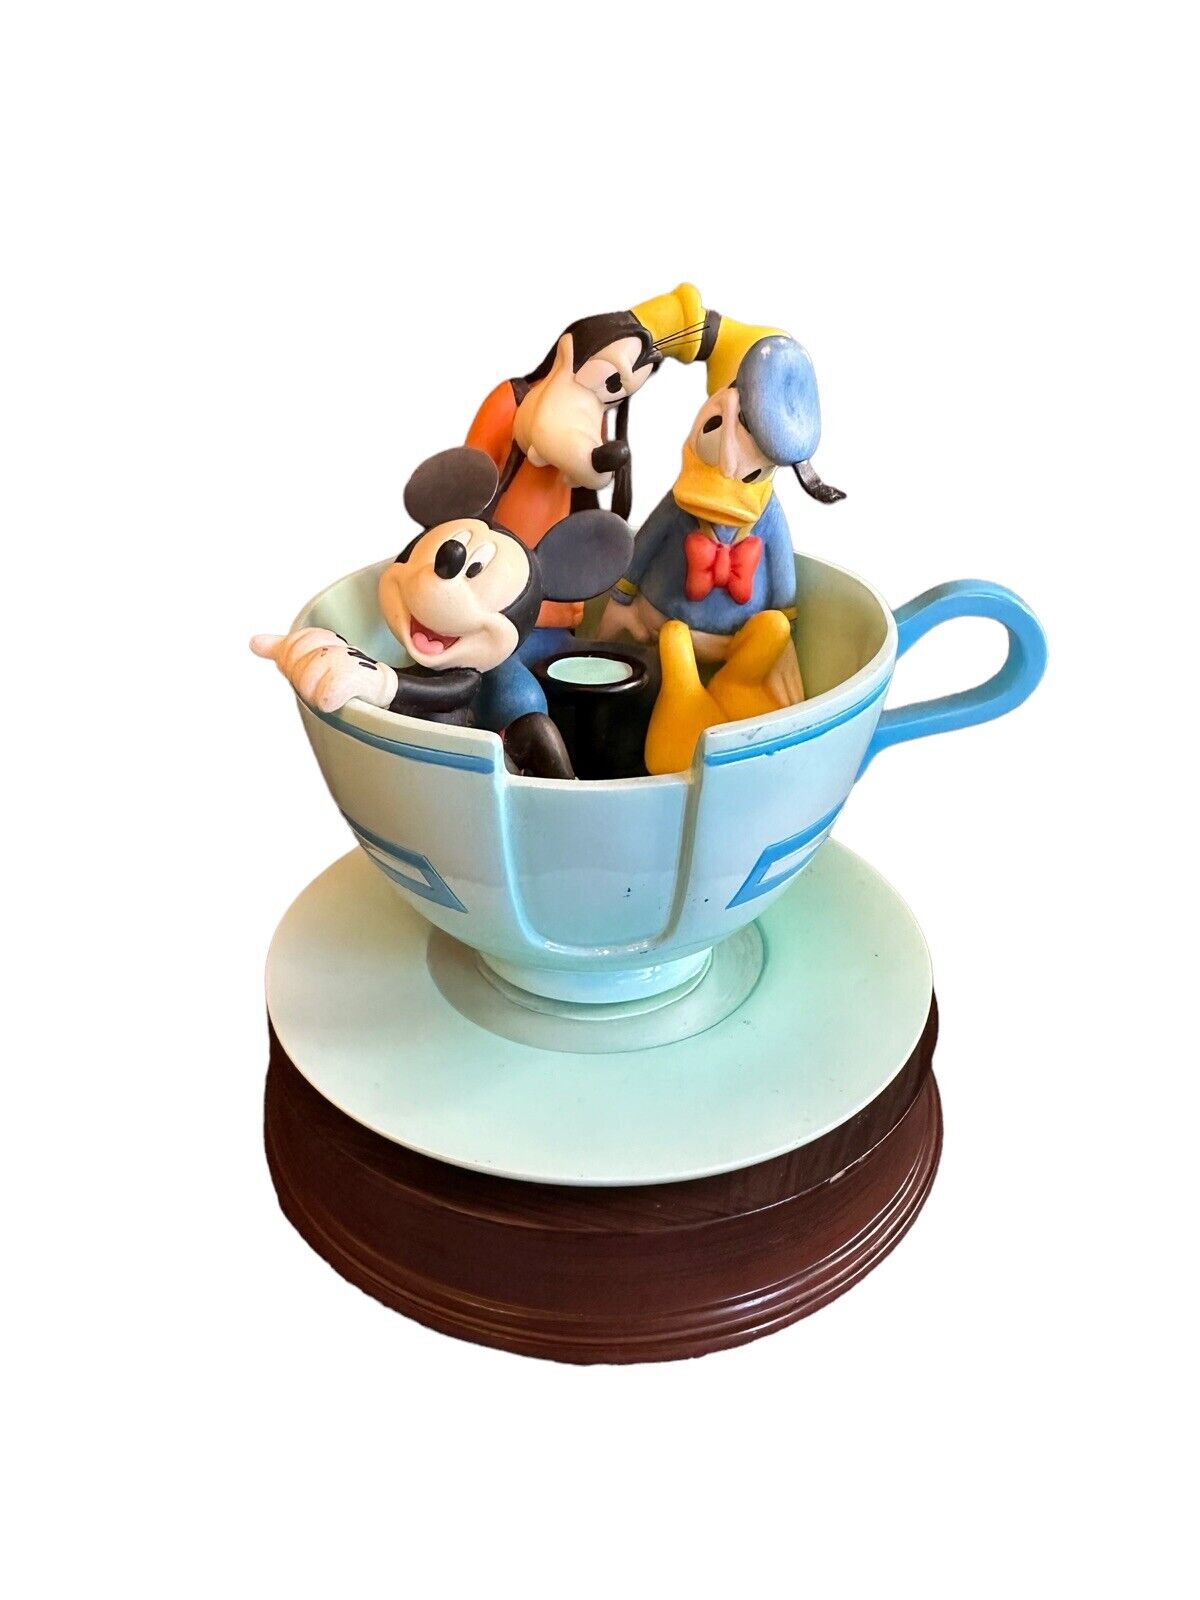 Disney Costa Alavezos Spinning Teacup Figurine LE 1000 Mickey Donald Goofy